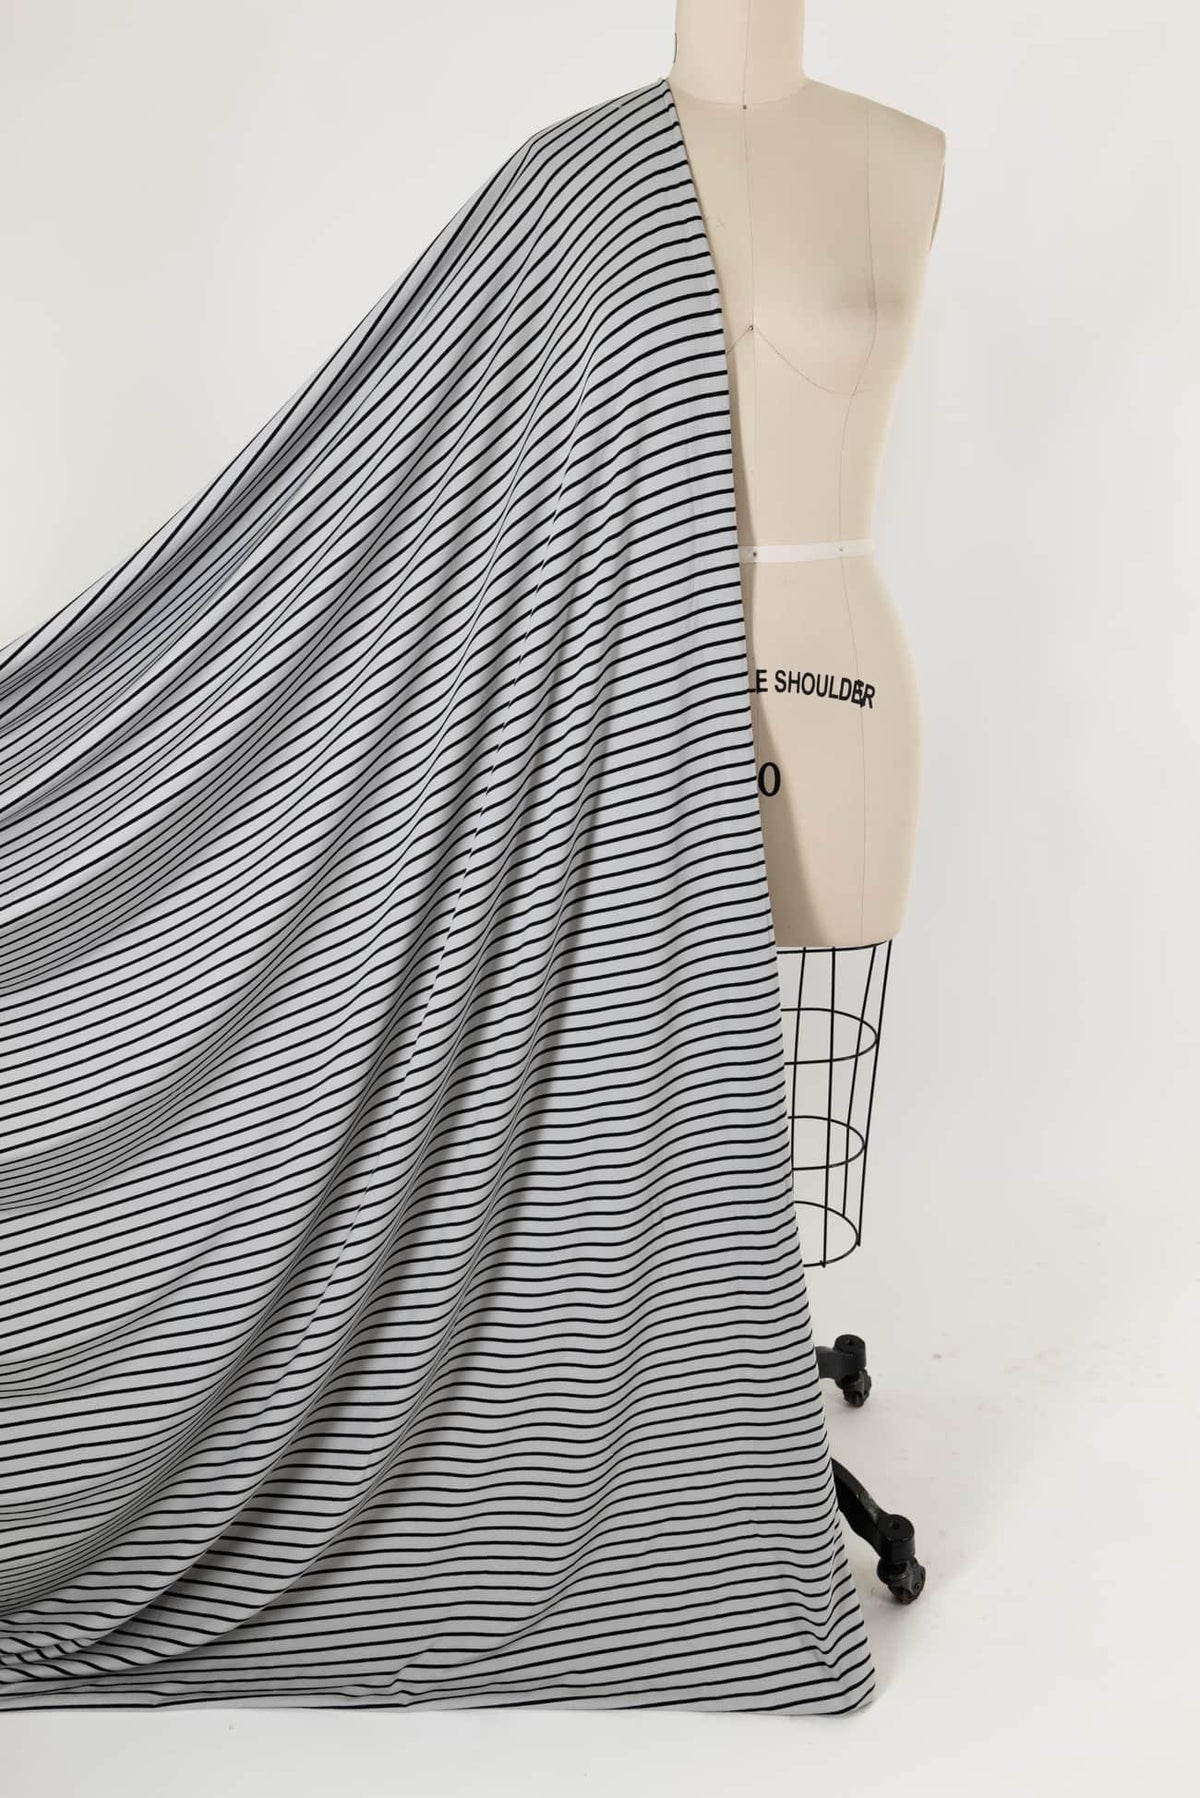 Bolinas Stripe USA Knit - Marcy Tilton Fabrics